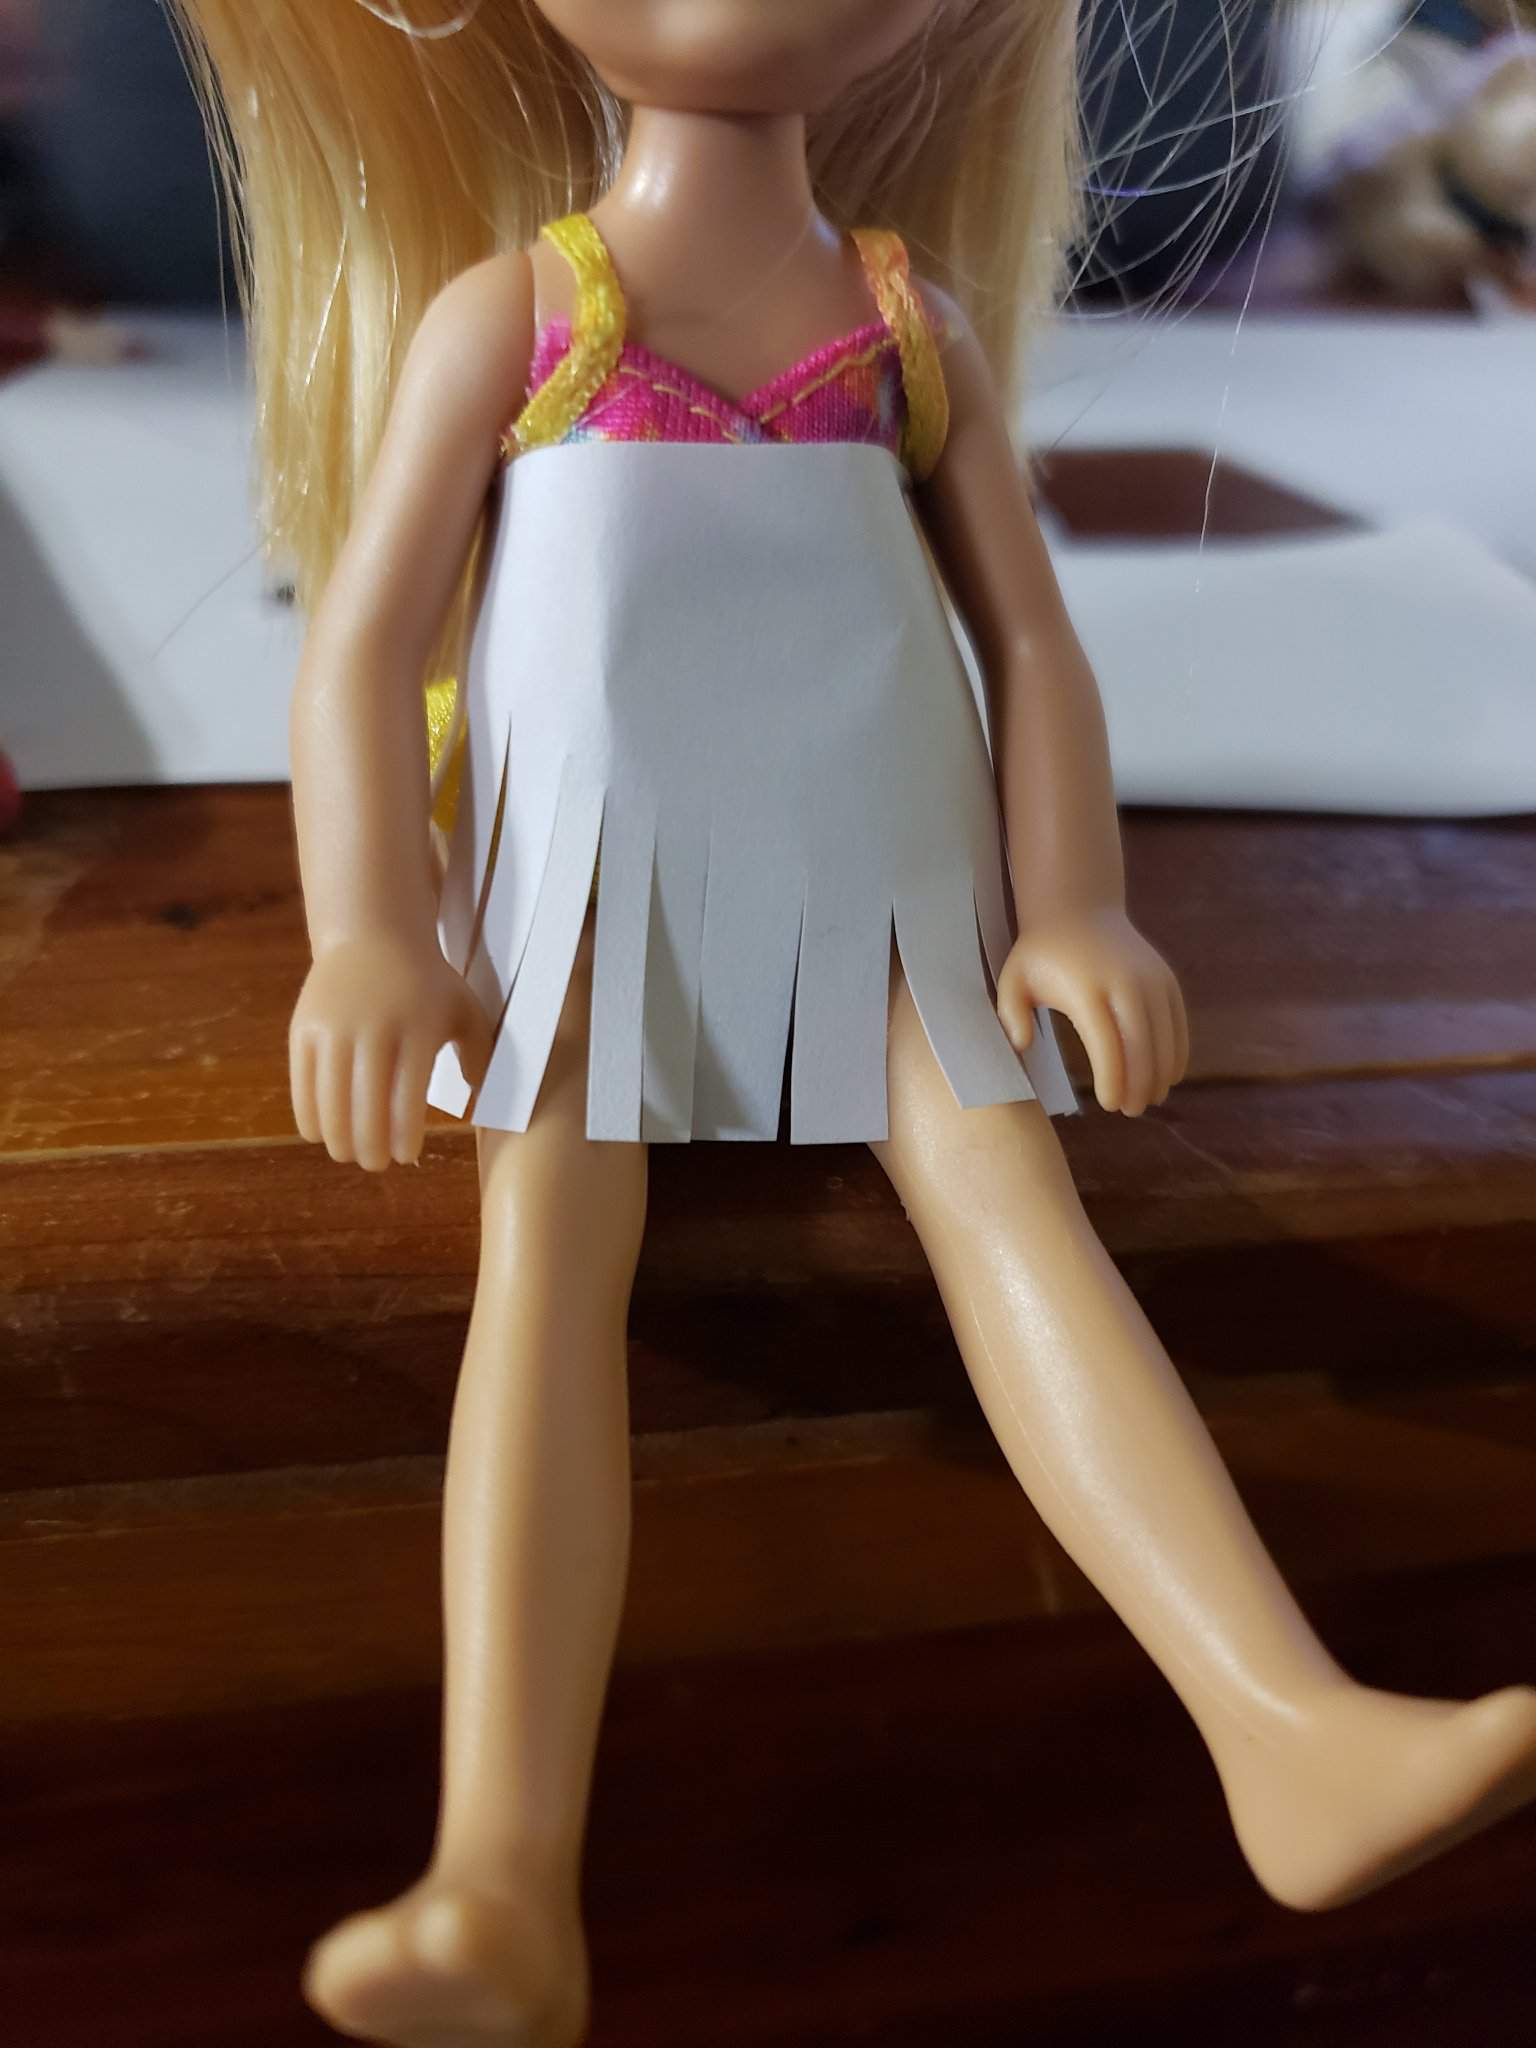 barbie paper dress